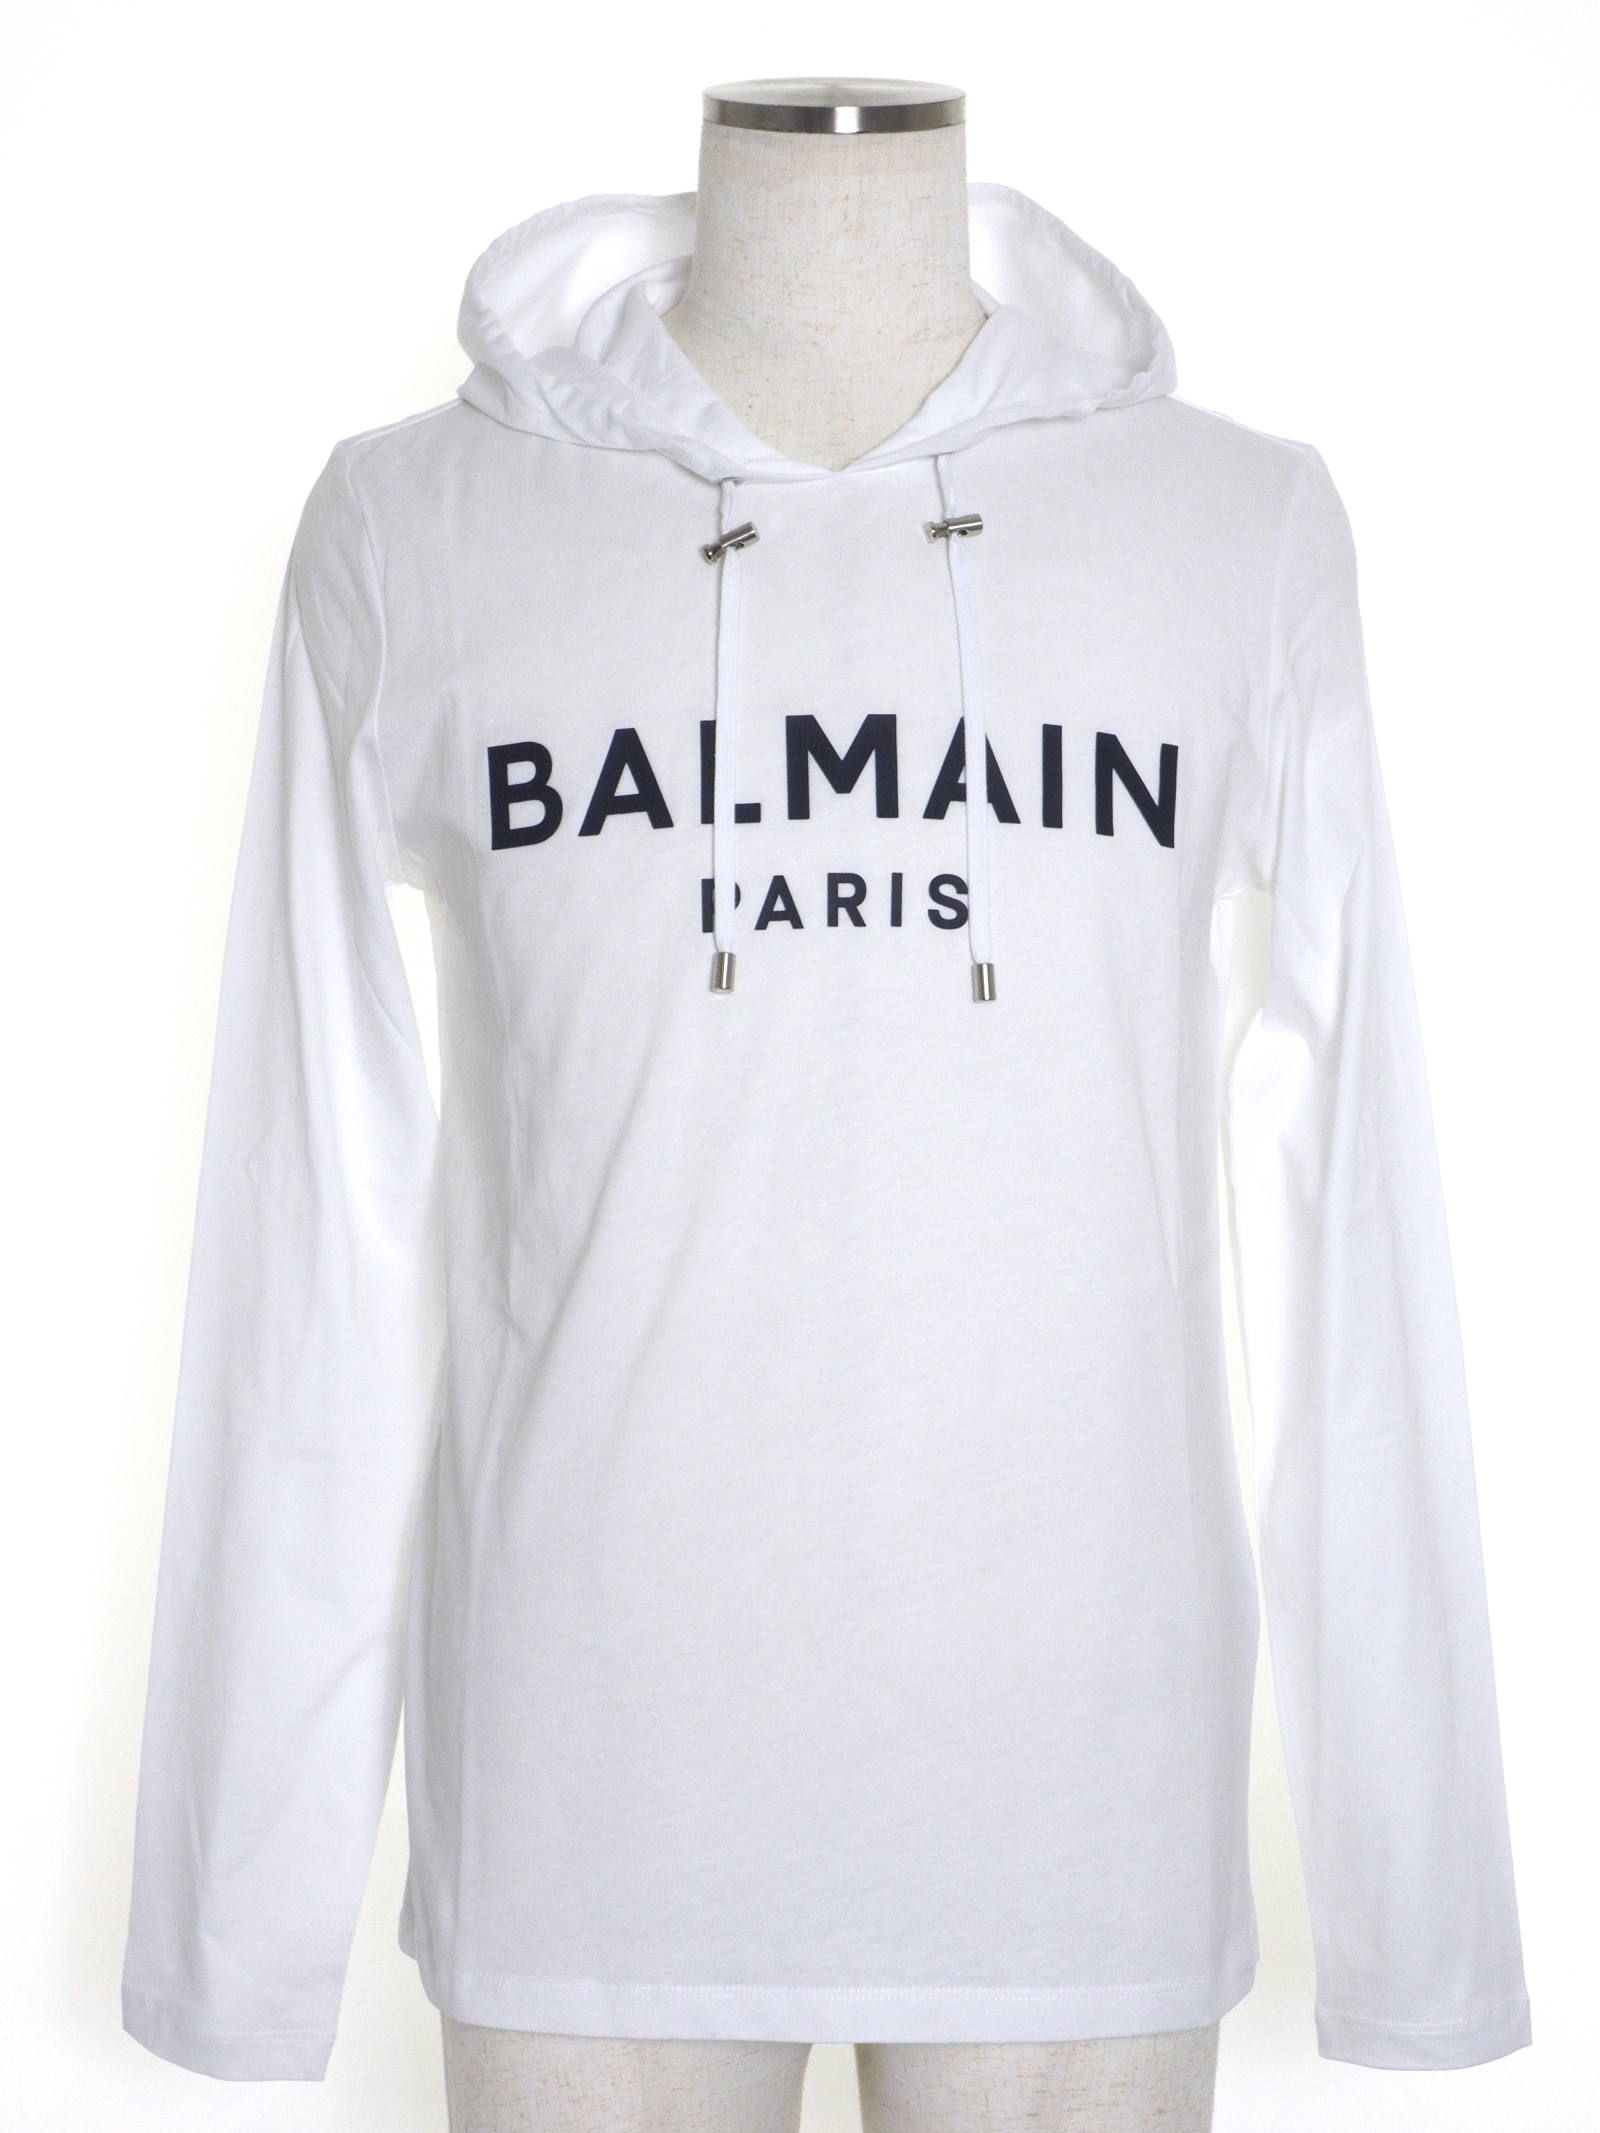 BALMAIN - フード付長袖Tシャツ - WHITE | STORY